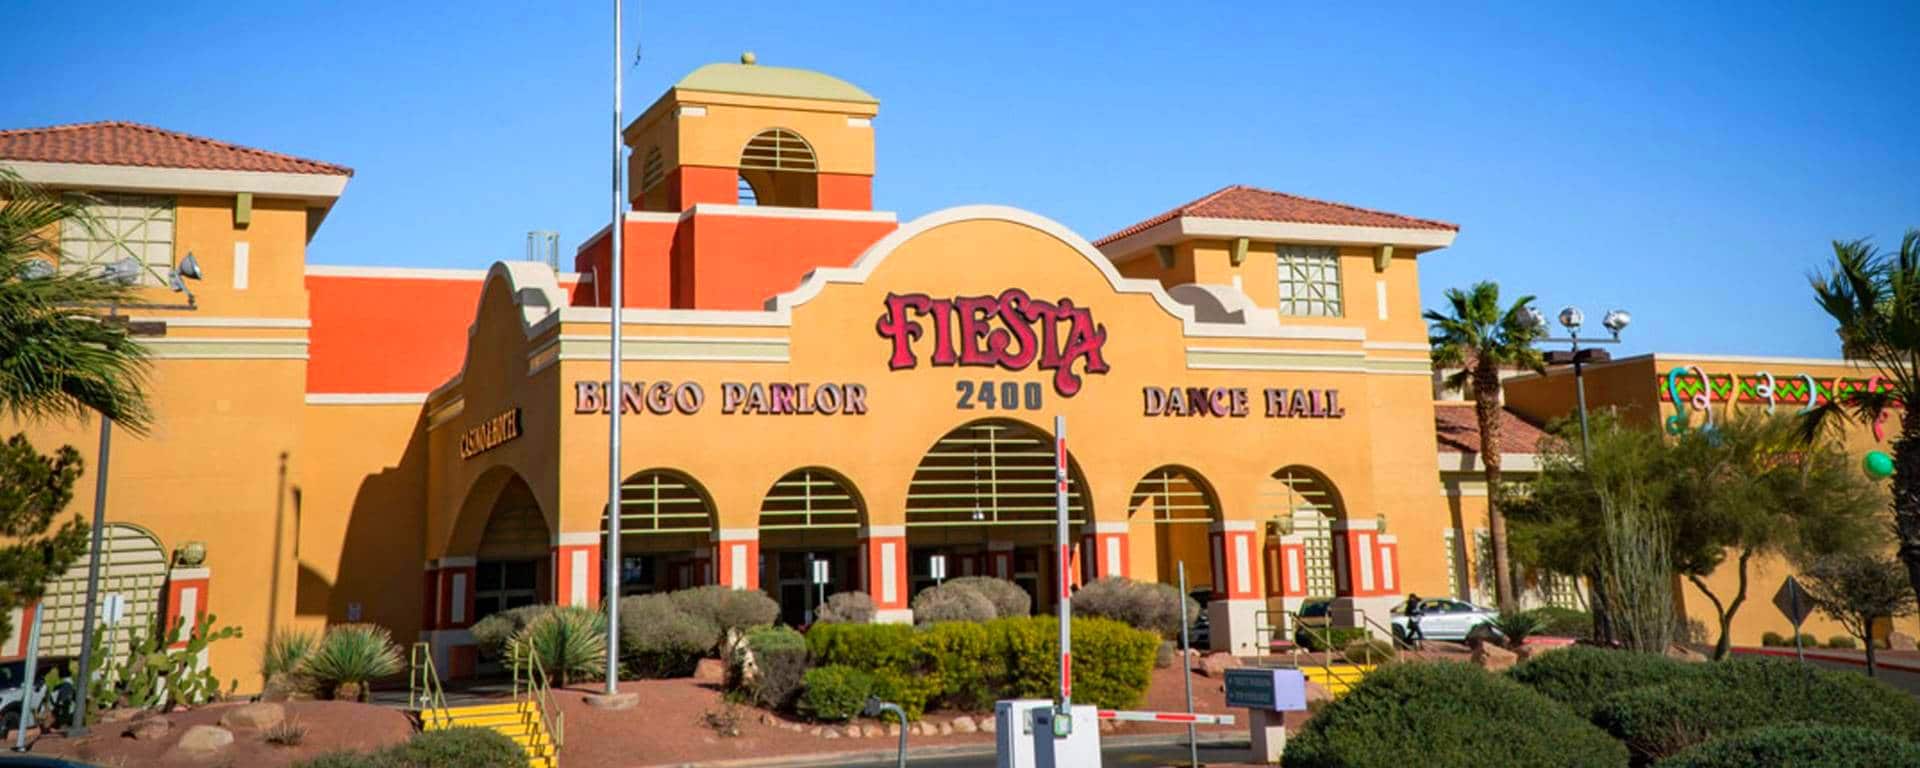 fiesta hotel and casino movie theater